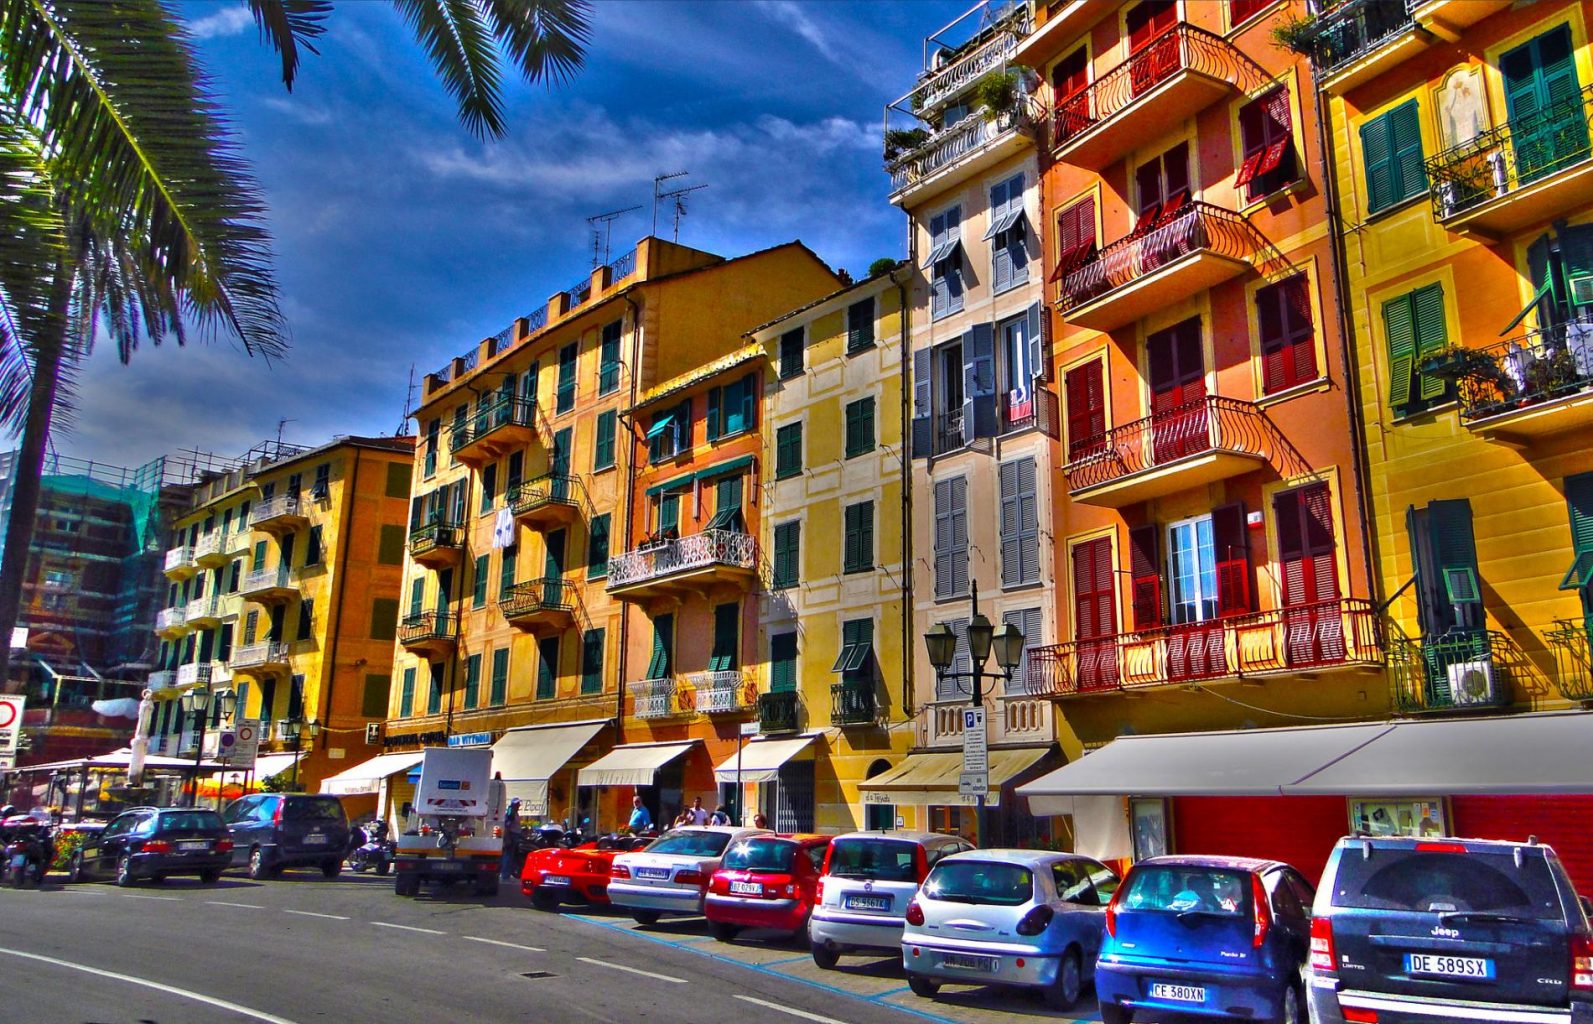 alt="Santa Margherita Ligure Genoa Liguria Italy"